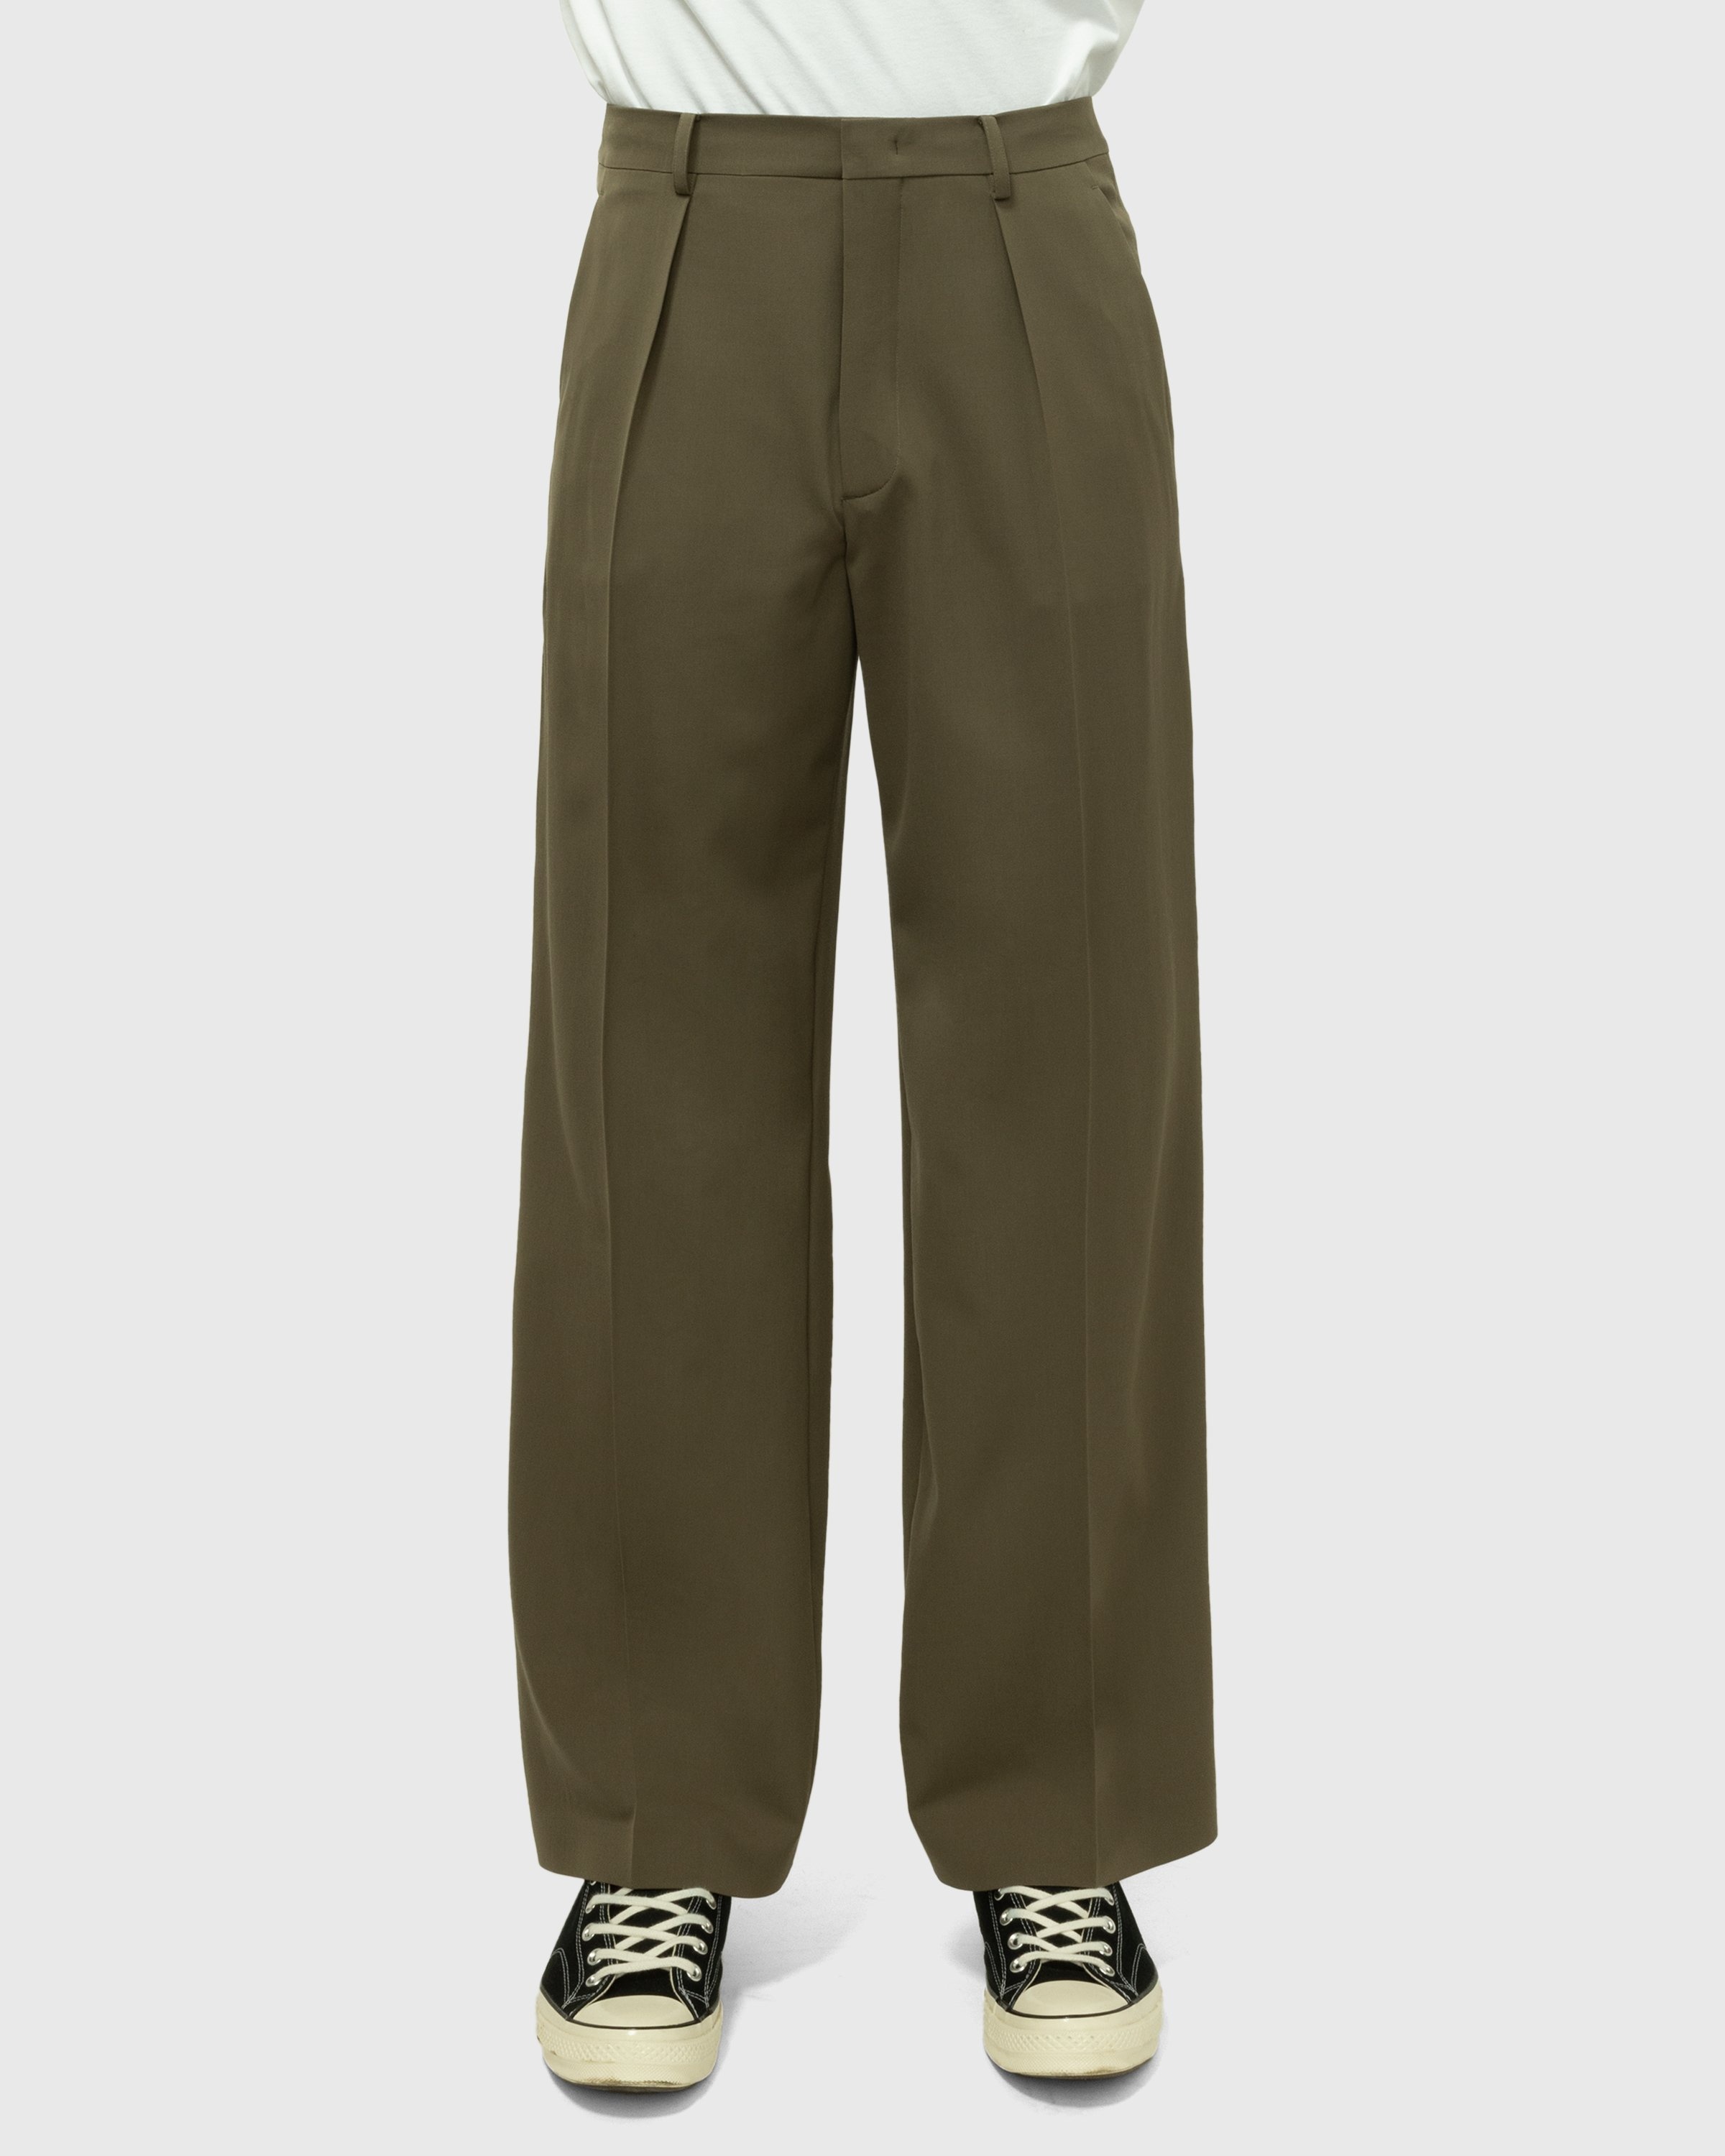 Jean Paul Gaultier – Classic Woven Trouser Khaki - Pants - Brown - Image 2